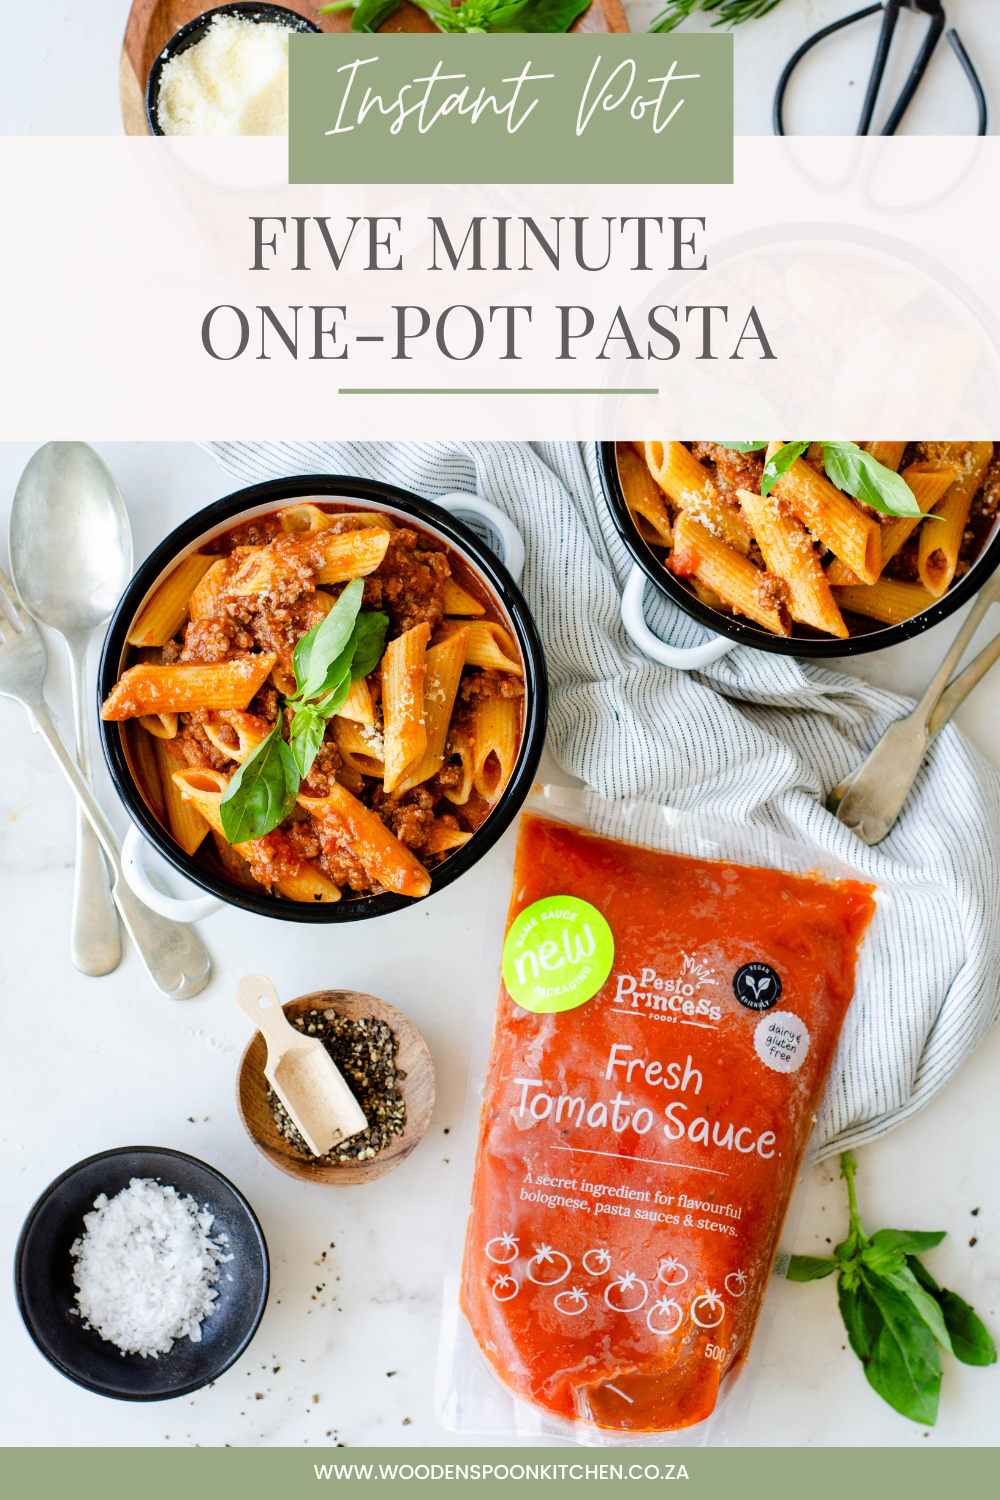 Five minute one-pot pasta